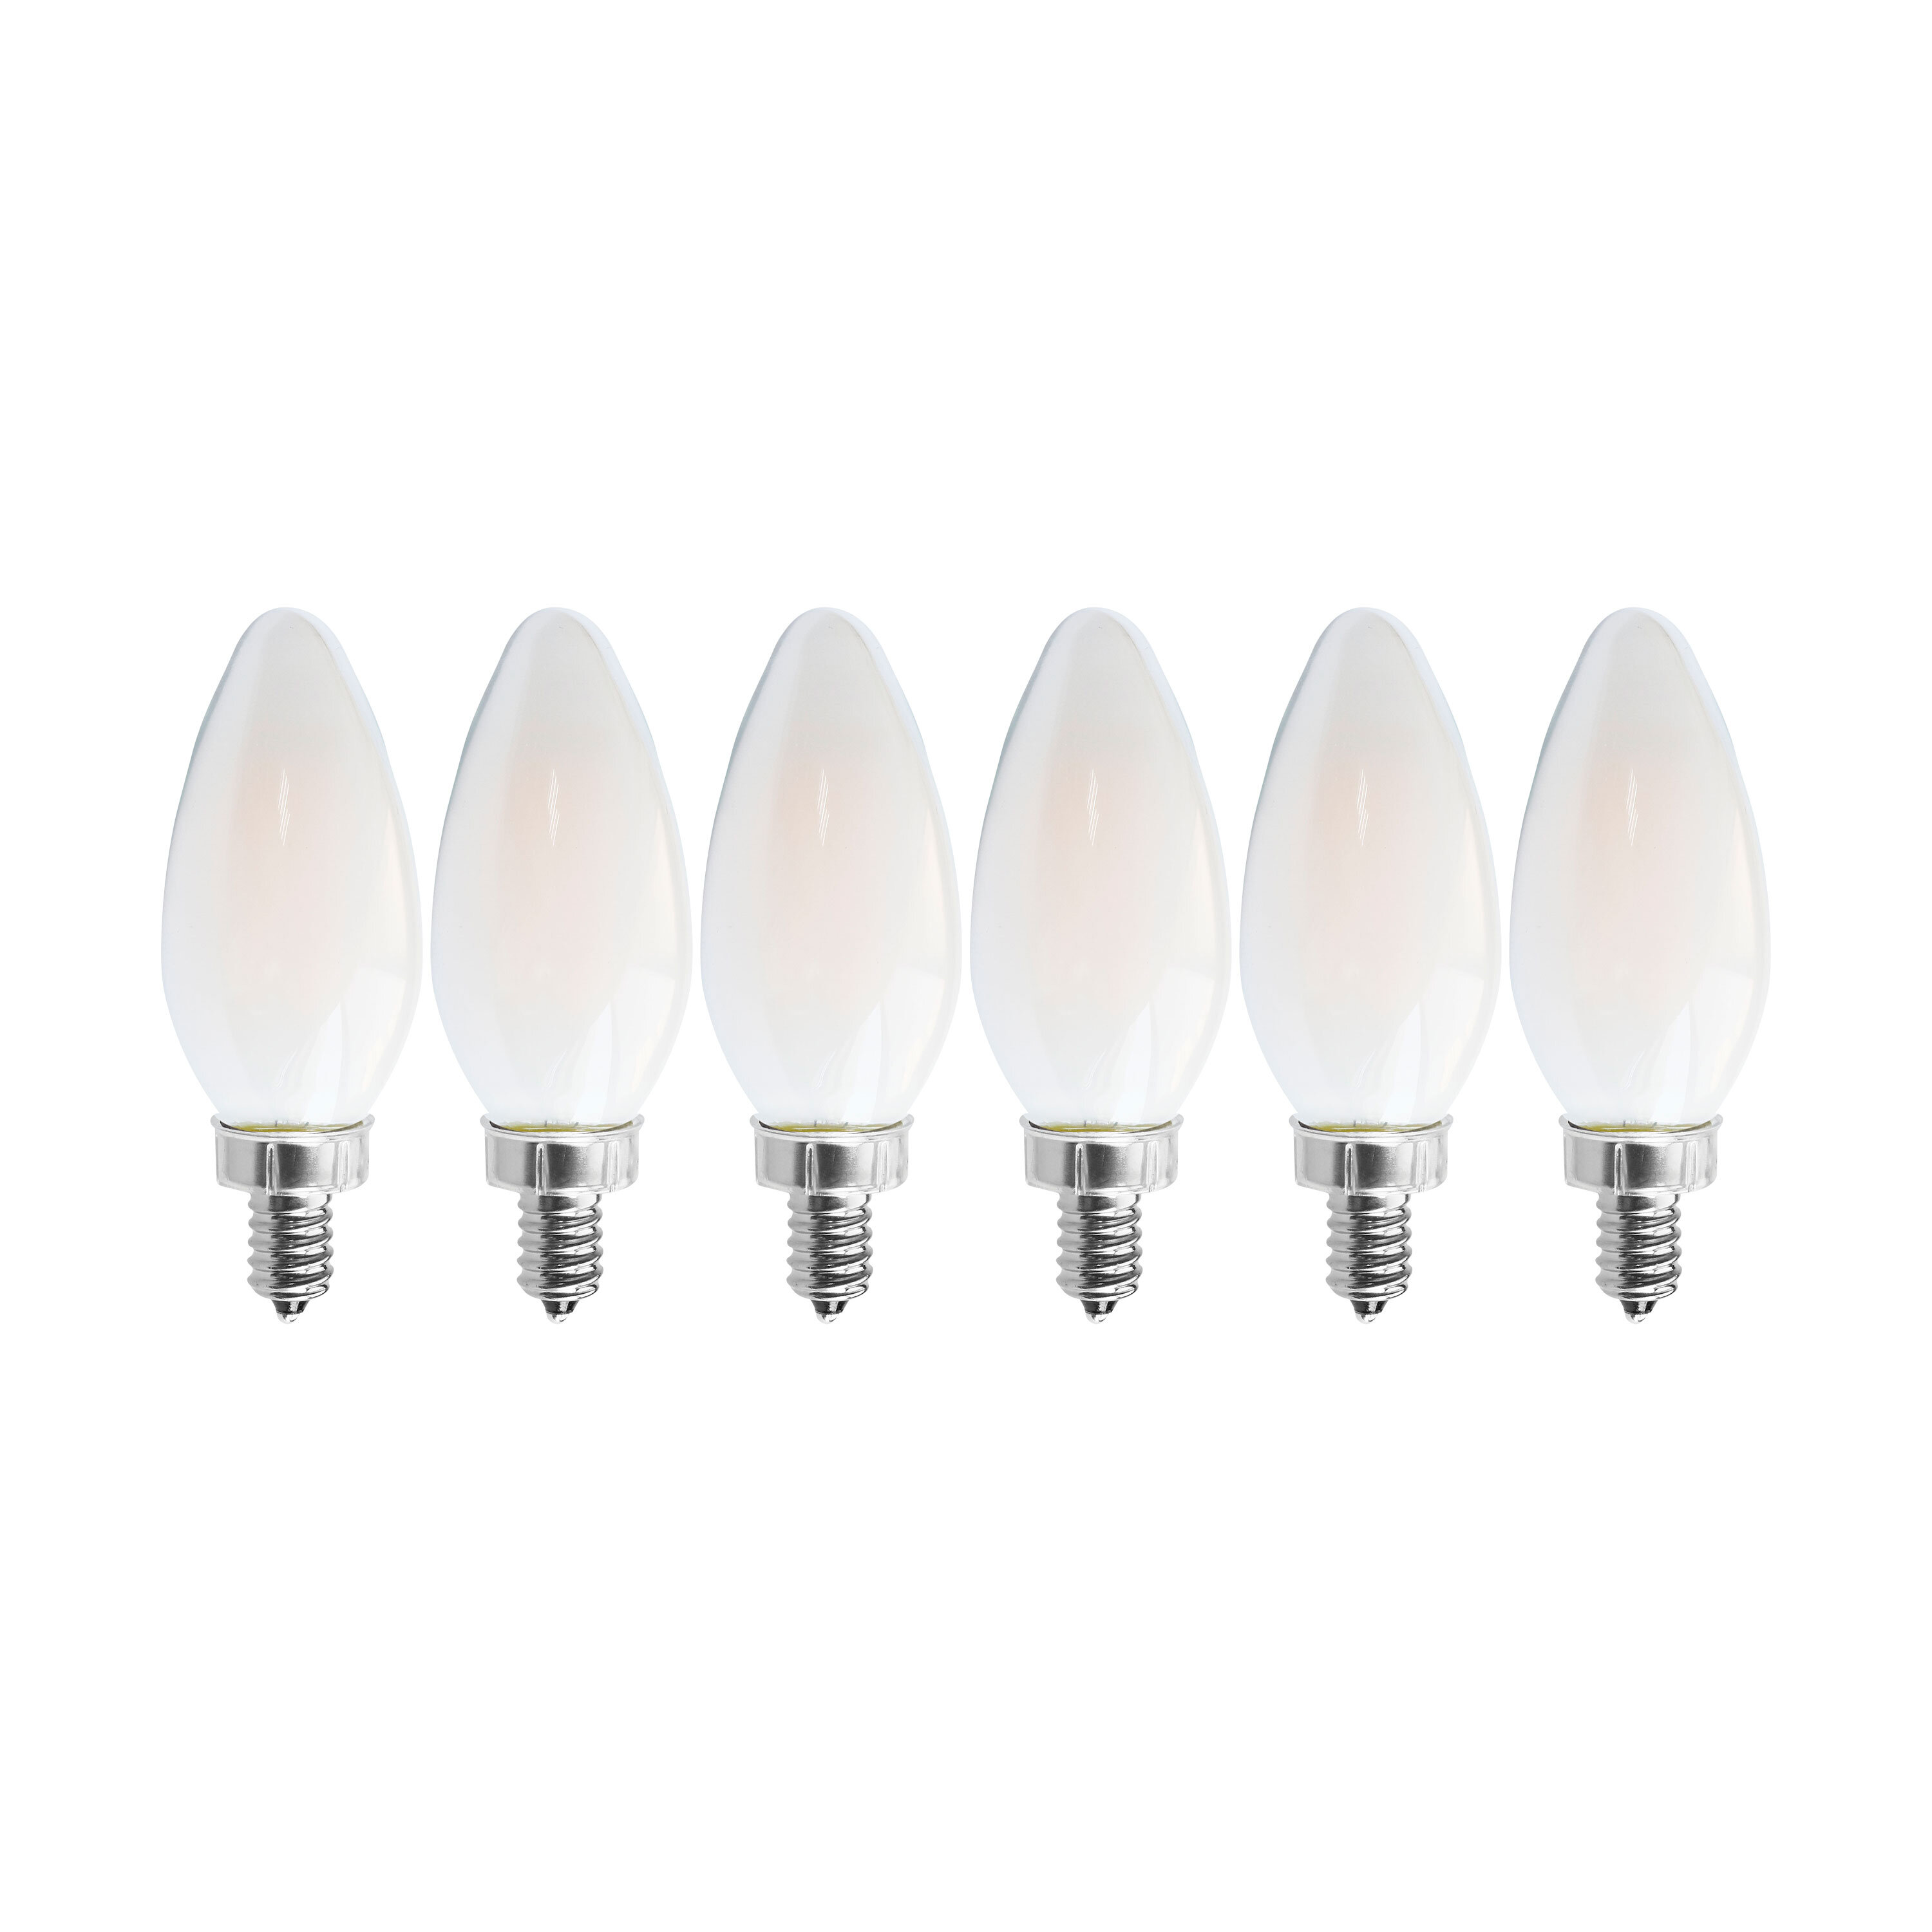 Decorative Candle Base Warm White 2700K Chandelier Bulbs Non-Dimmable pack of 4 Albrillo E12 LED Bulb Candelabra Light Bulbs 6W 60 Watt Equivalent